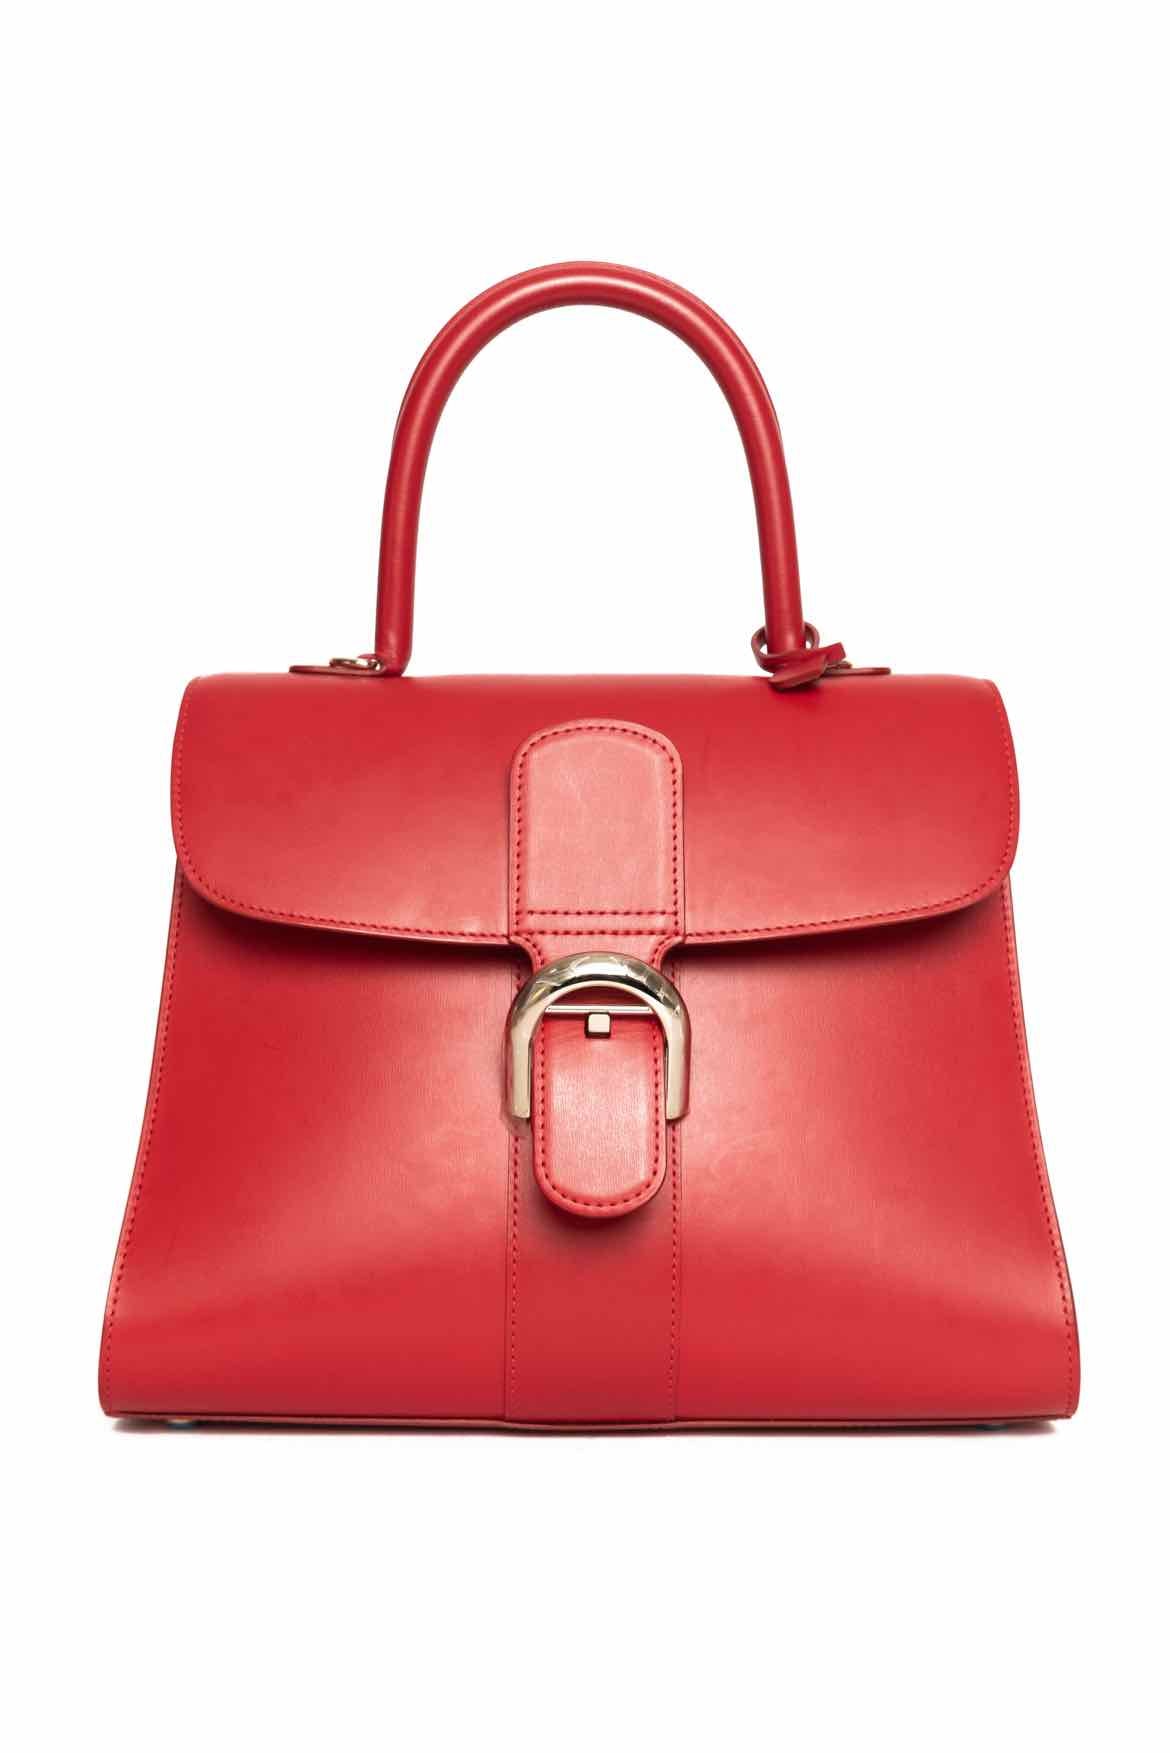 Delvaux Brillant Leather Handbag